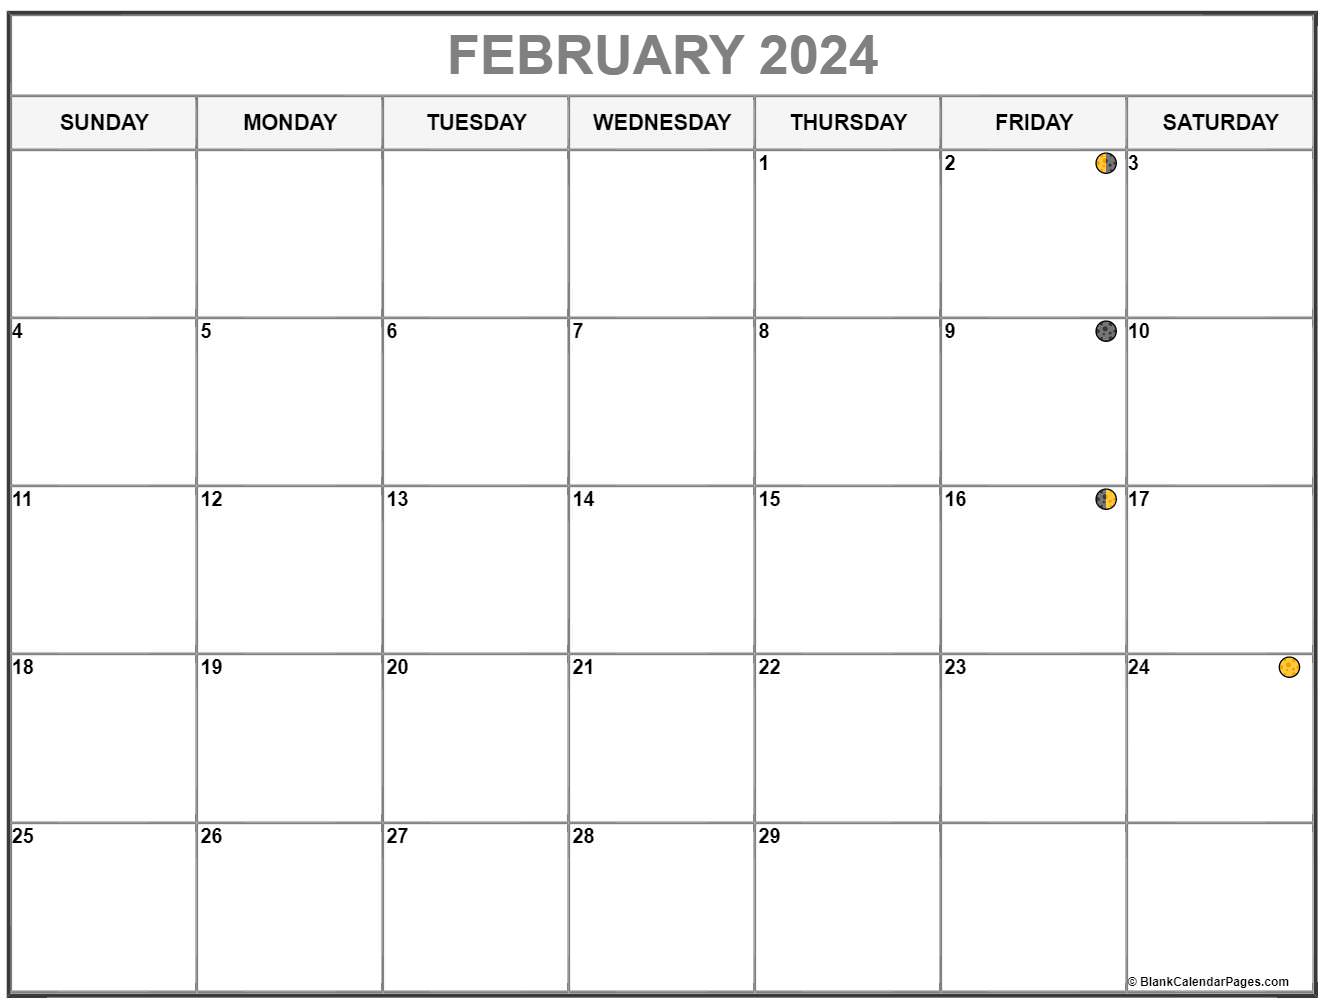 Moon Calendar September 2022 February 2022 Lunar Calendar | Moon Phase Calendar